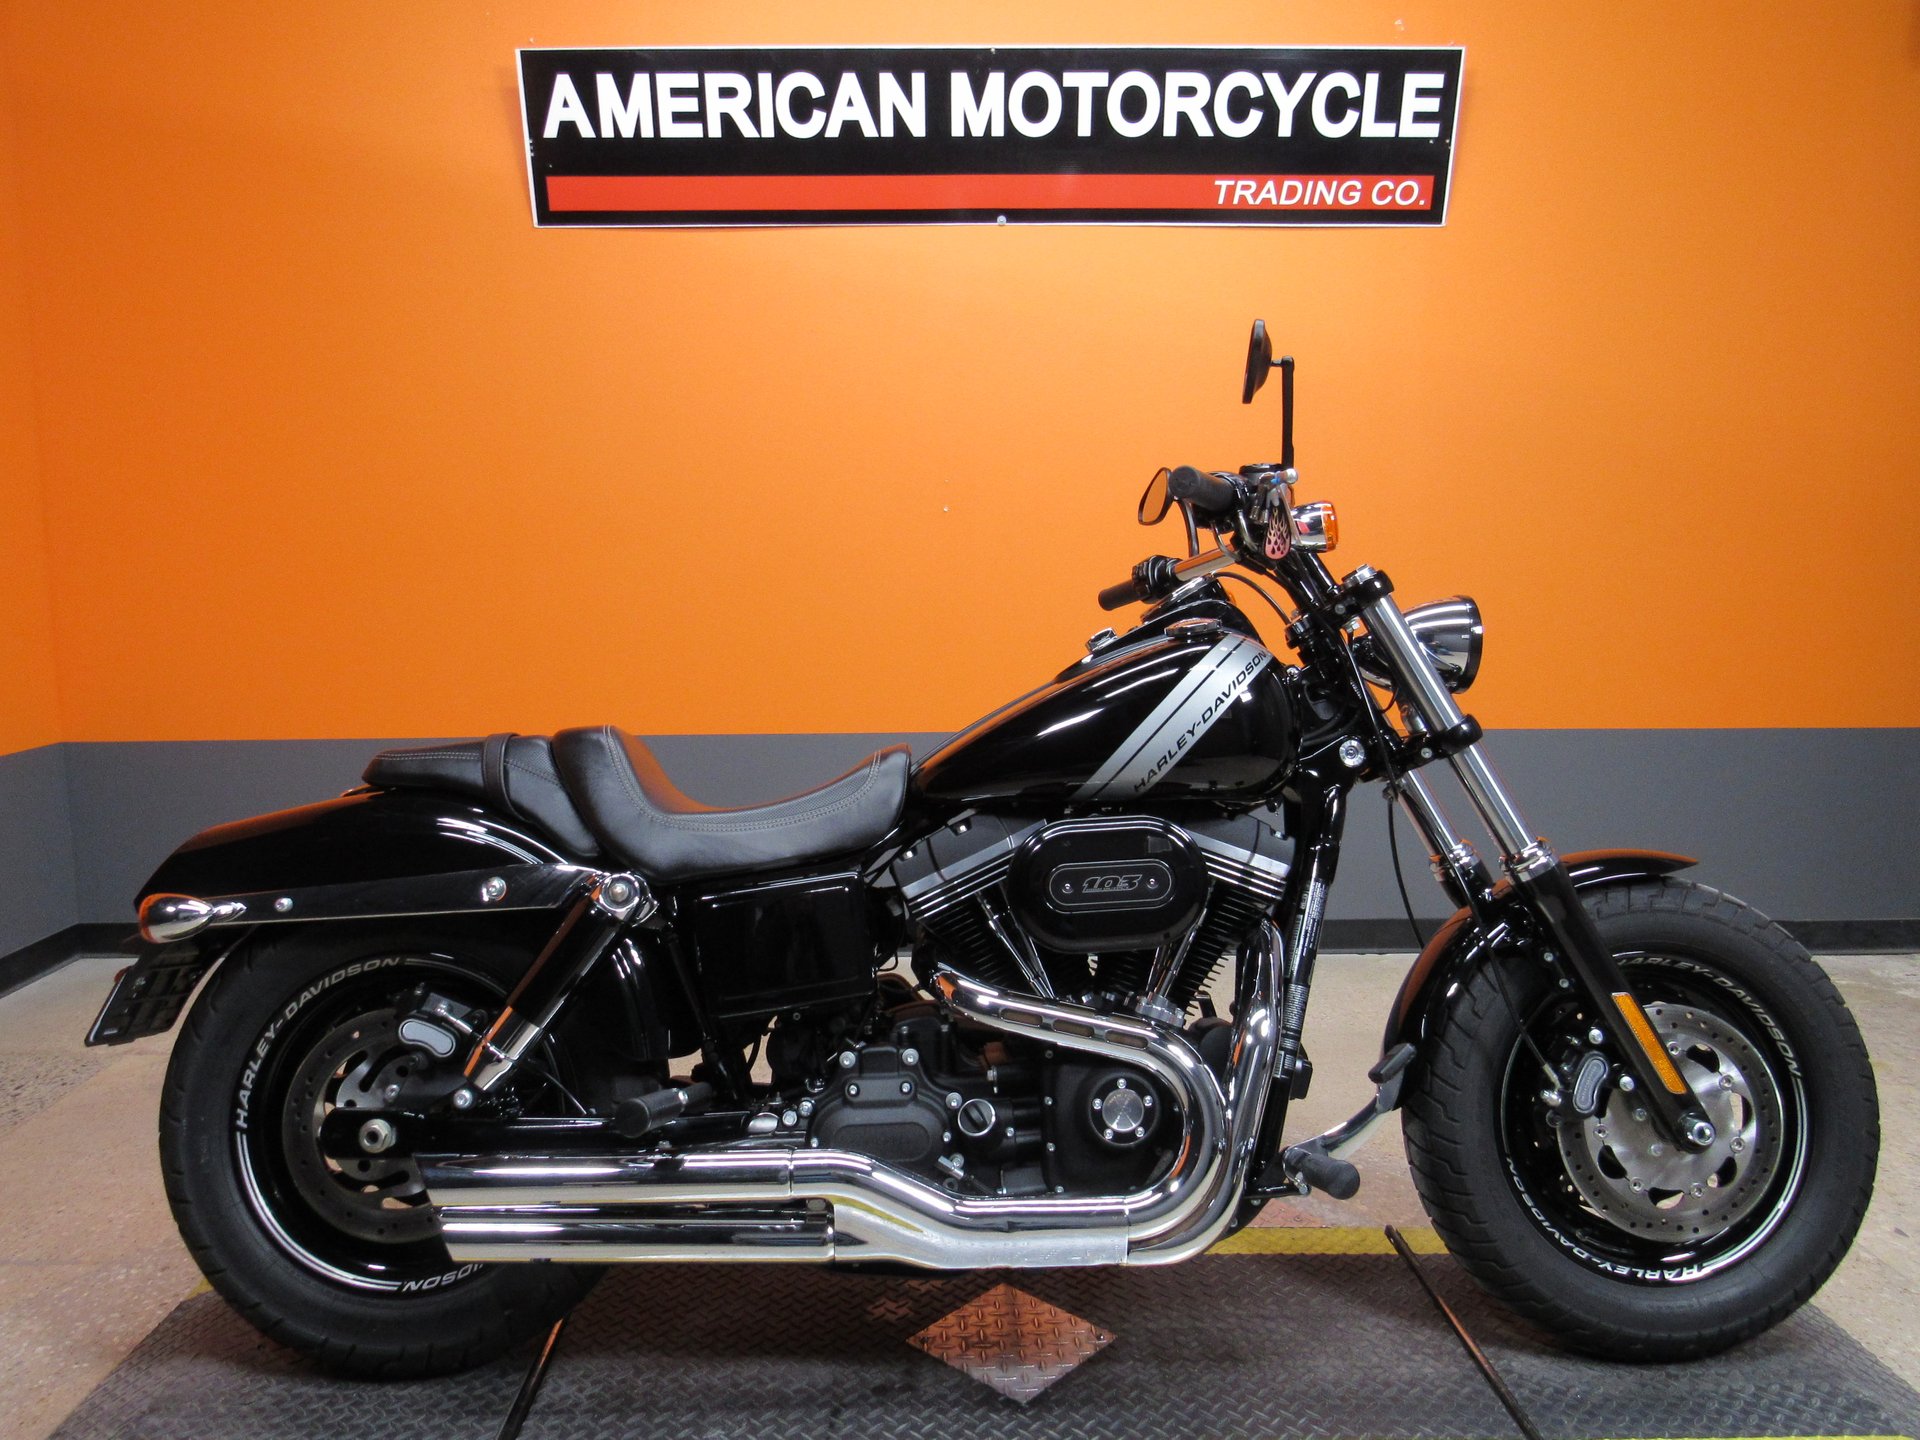 2016 Harley-Davidson Dyna Fat Bob | American Motorcycle Trading Company -  Used Harley Davidson Motorcycles